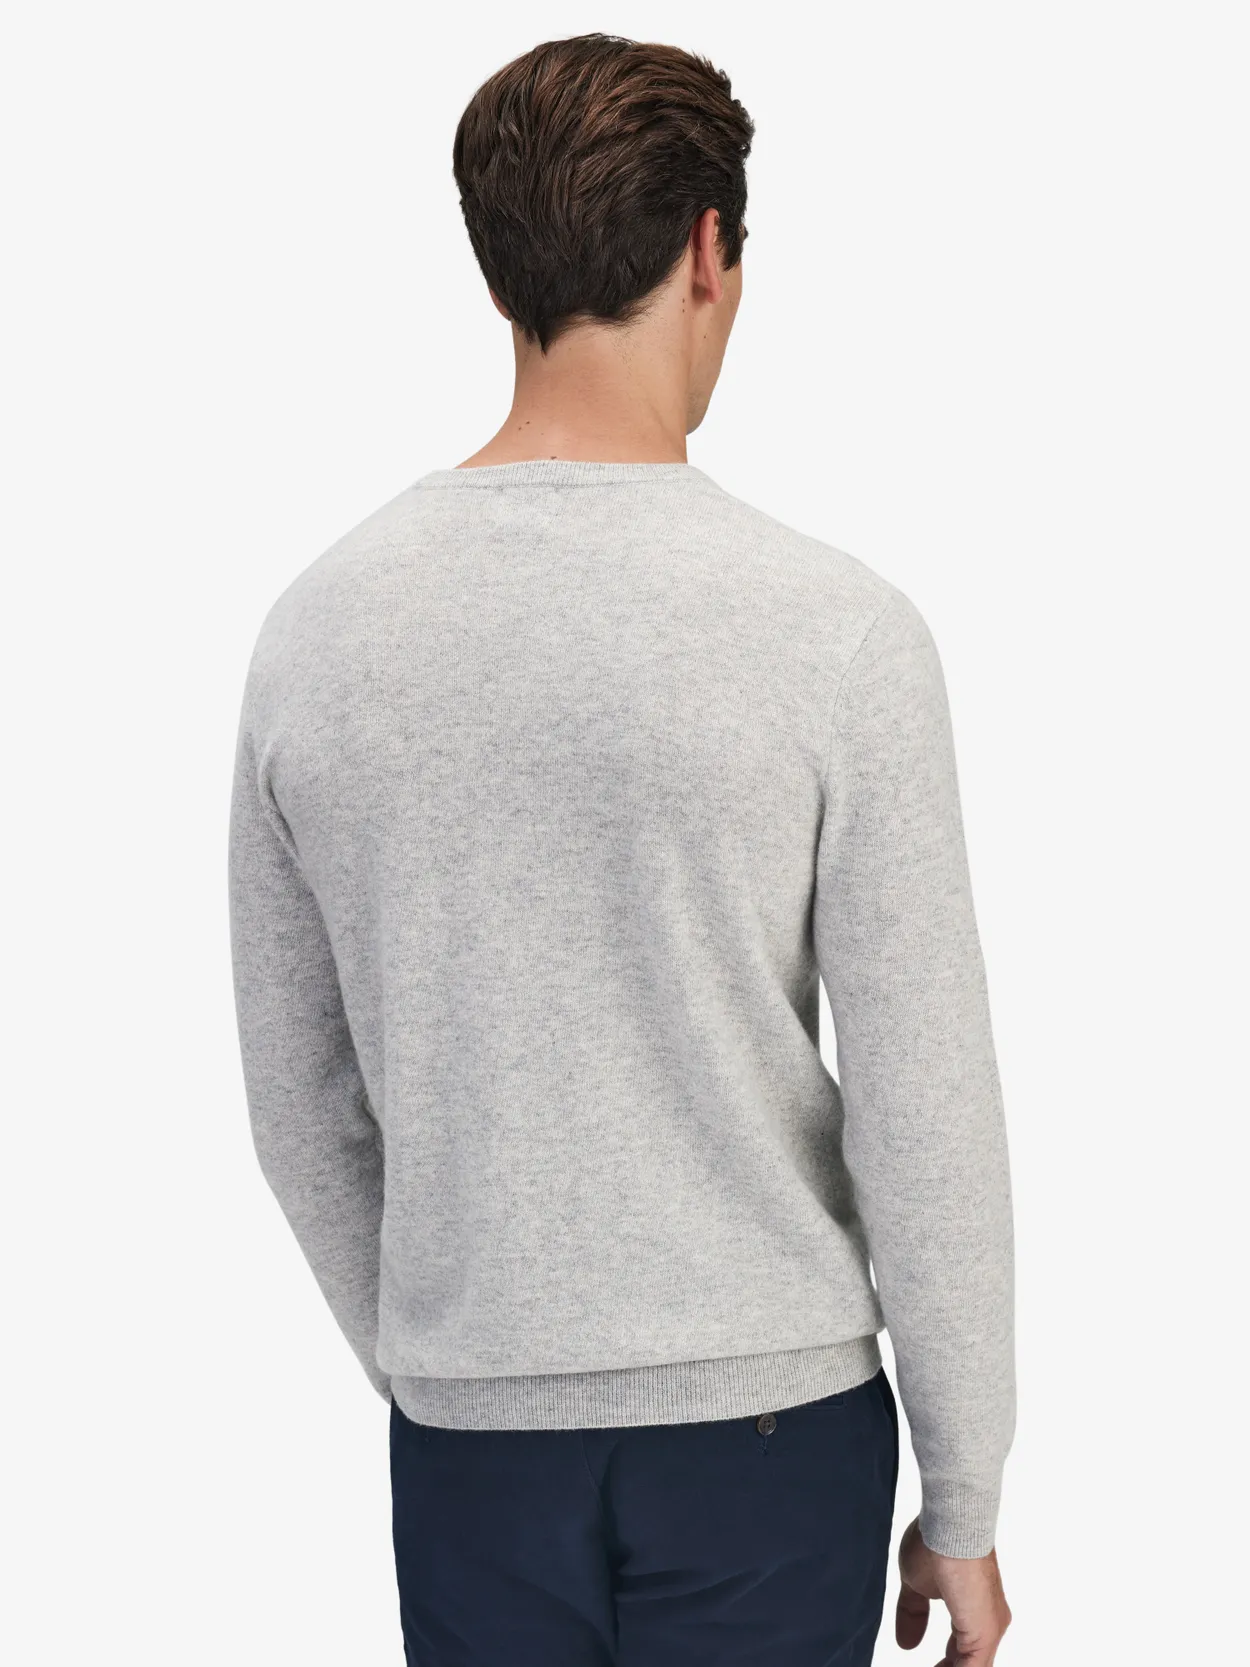 Cashmere Boutique: Men's 100% Pure Cashmere Zip Cardigan Jacket Style  Sweater (Color: Burgundy, Size: Medium) : : Clothing, Shoes &  Accessories